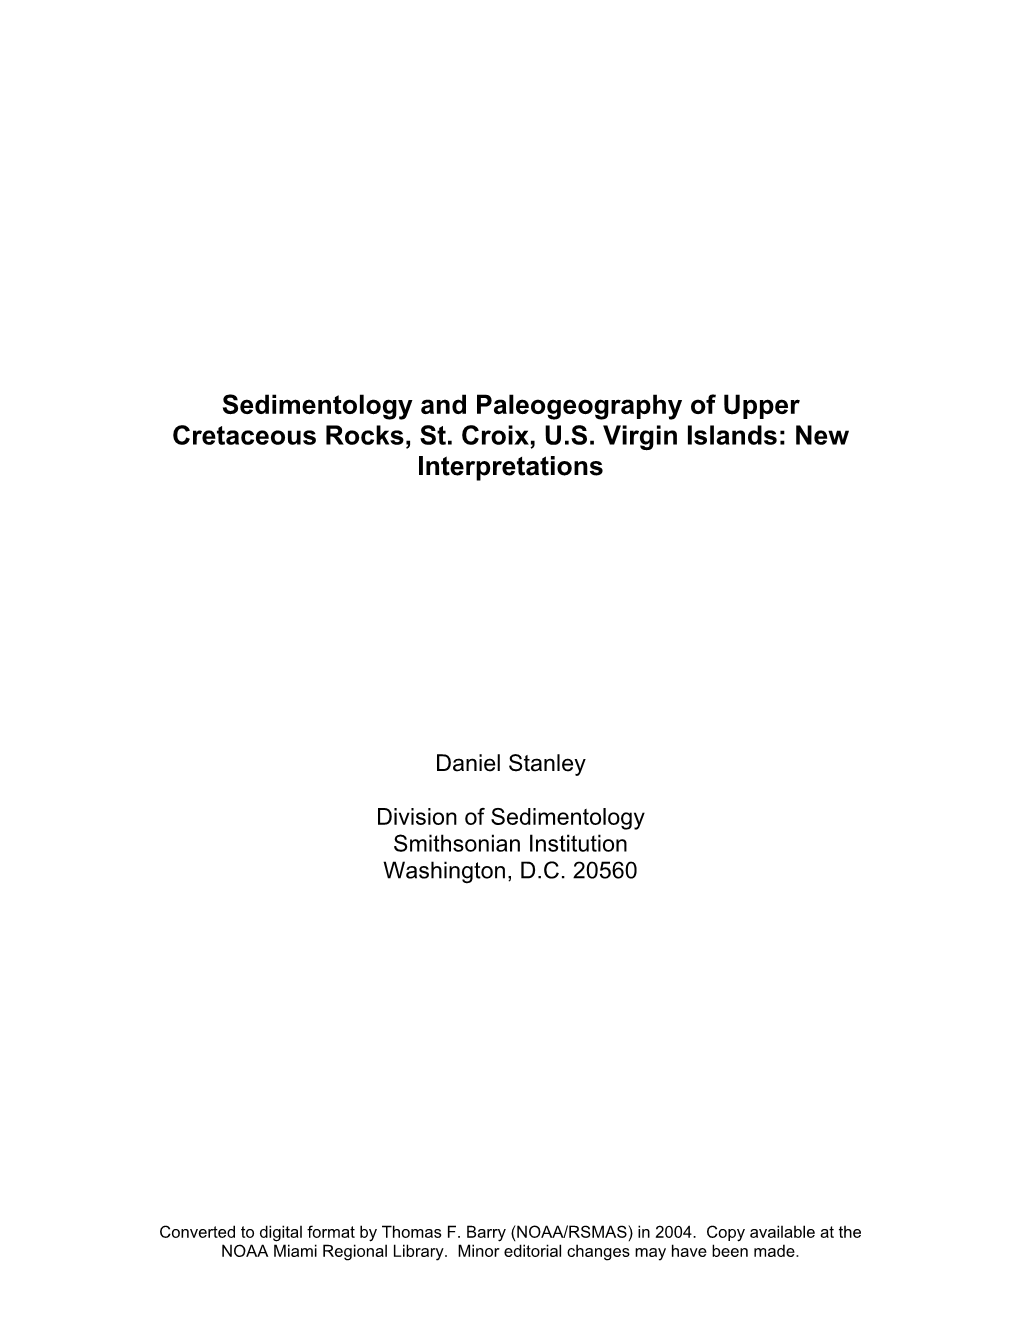 Sedimentology and Paleogeography of Upper Cretaceous Rocks, St